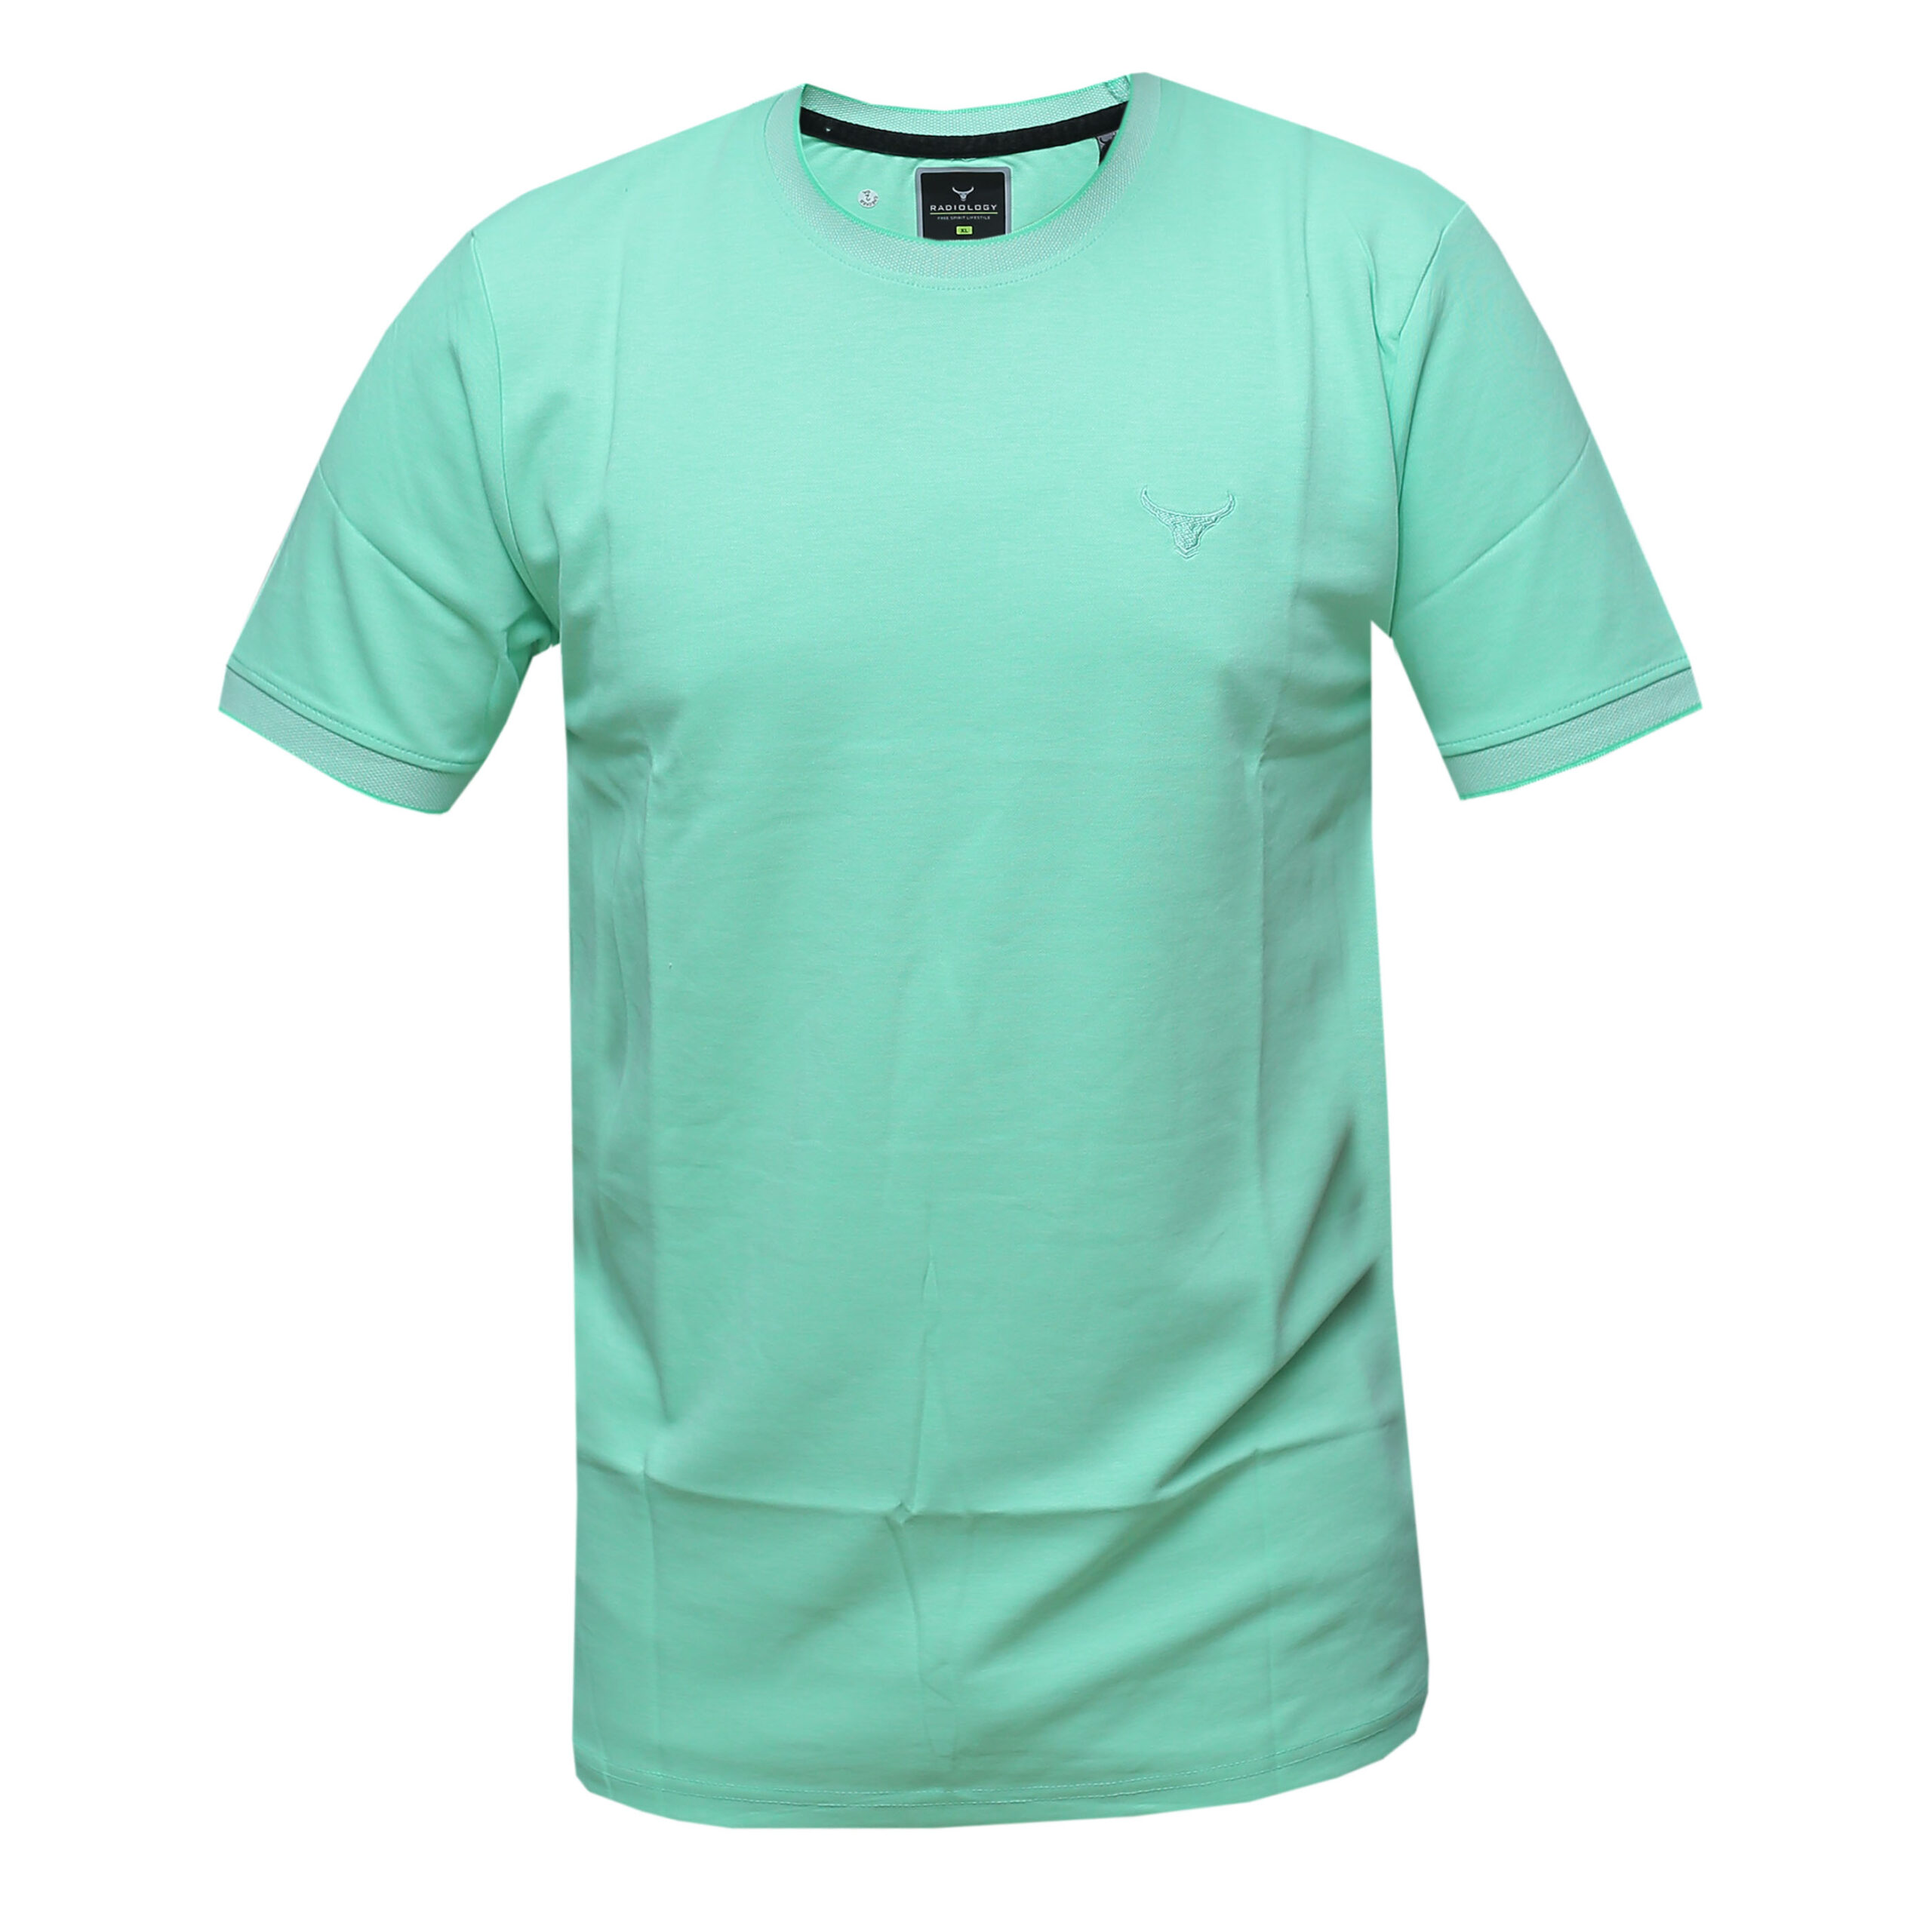 Plain T-Shirts for Men - Casual Wear for Men